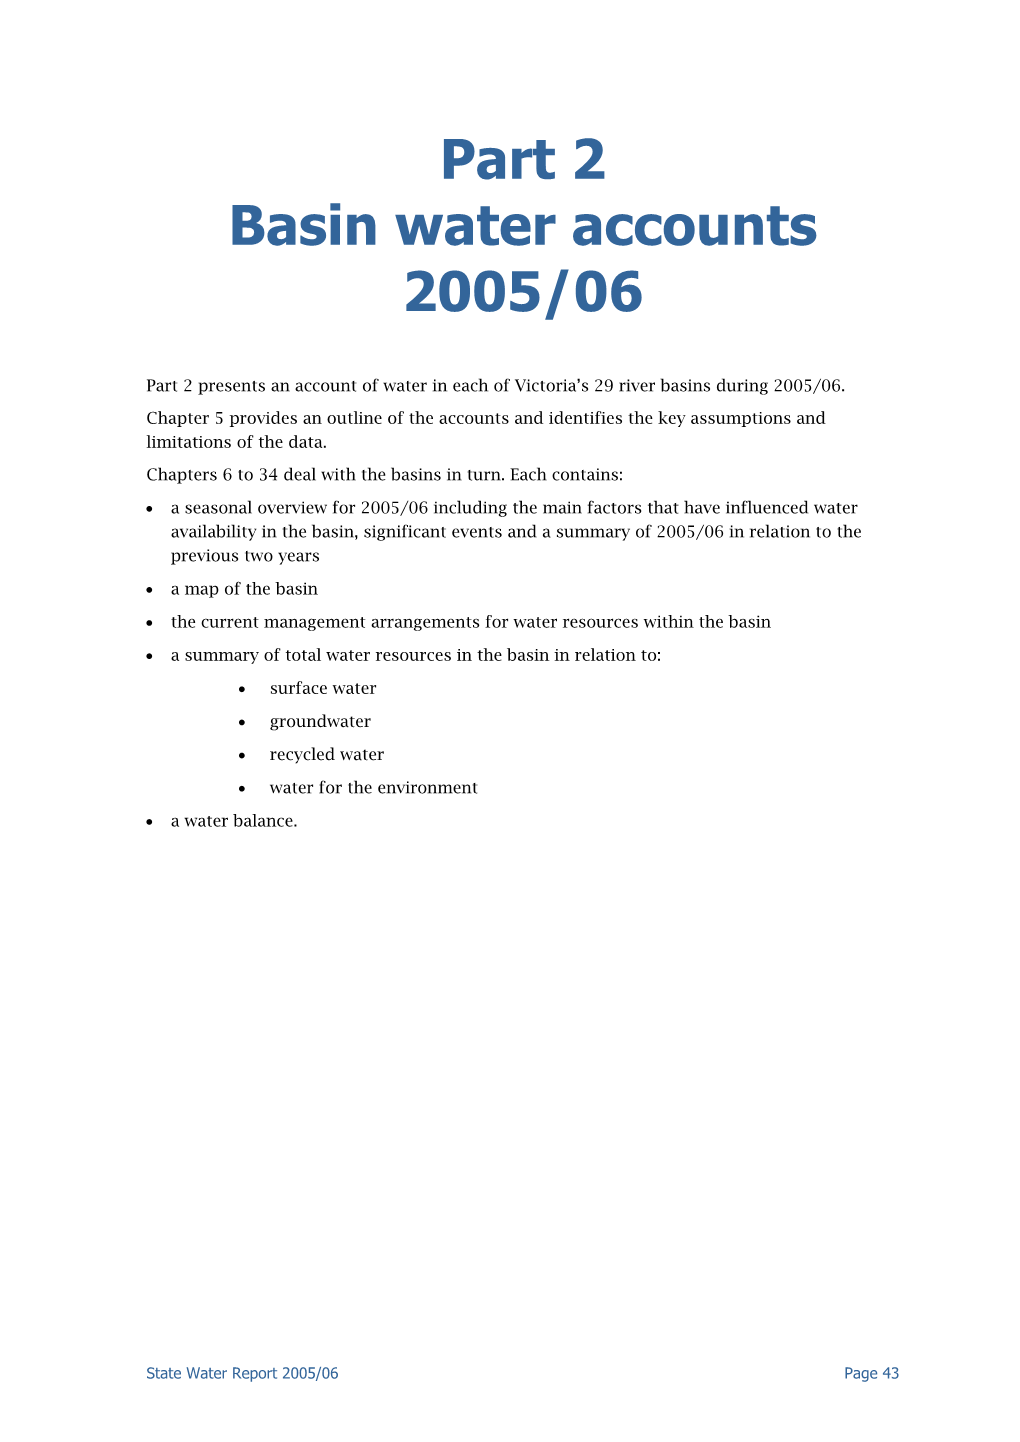 Part 2 Basin Water Accounts 2005/06